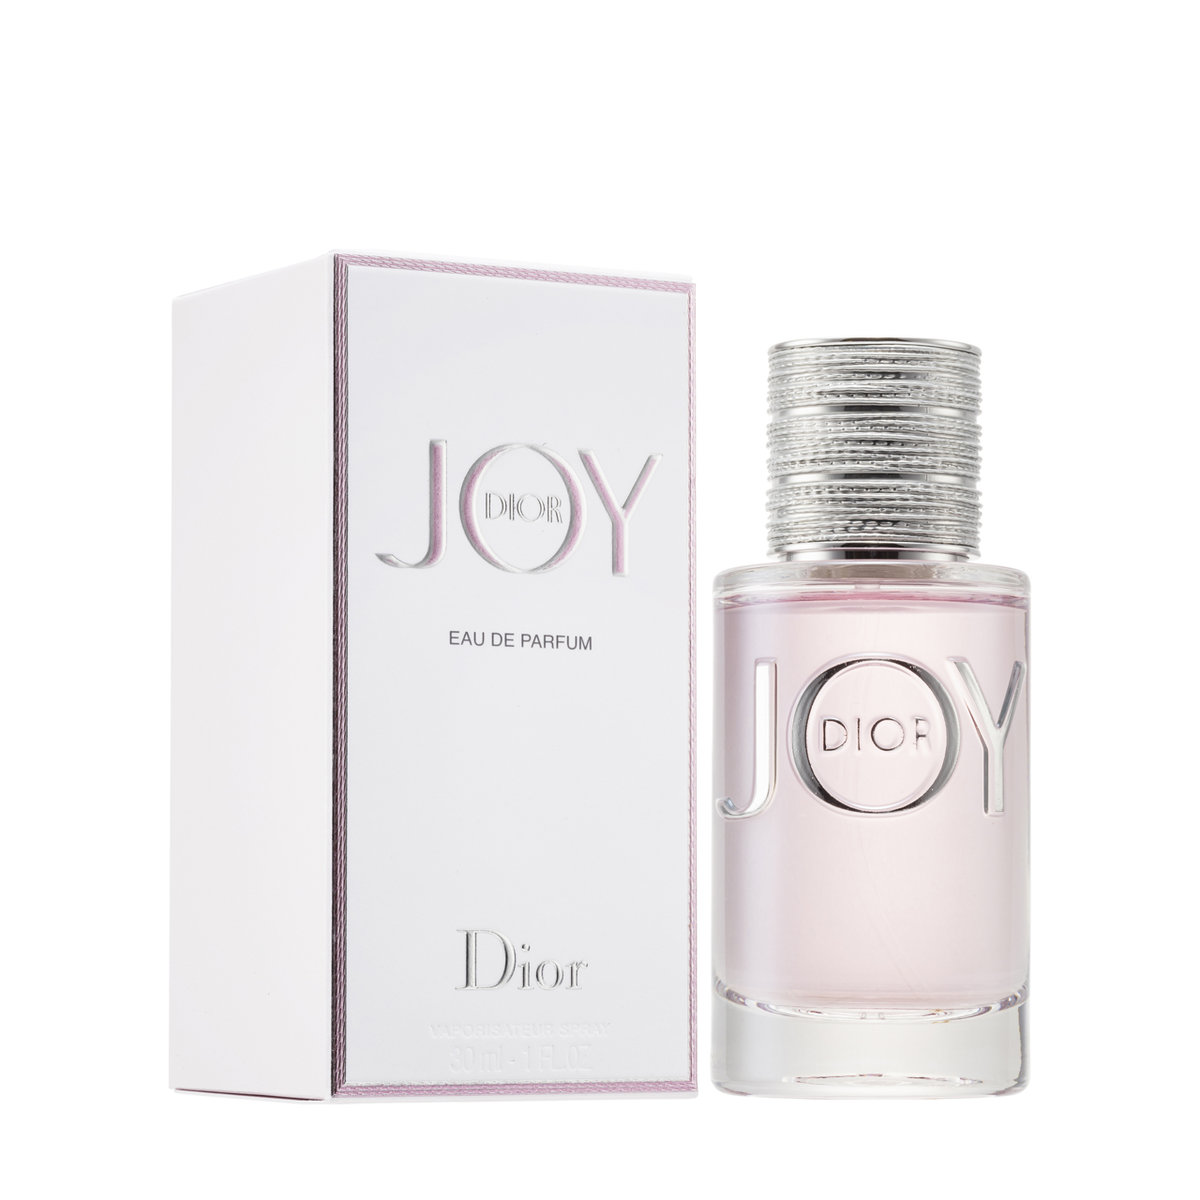 dior joy eau de parfum 30ml